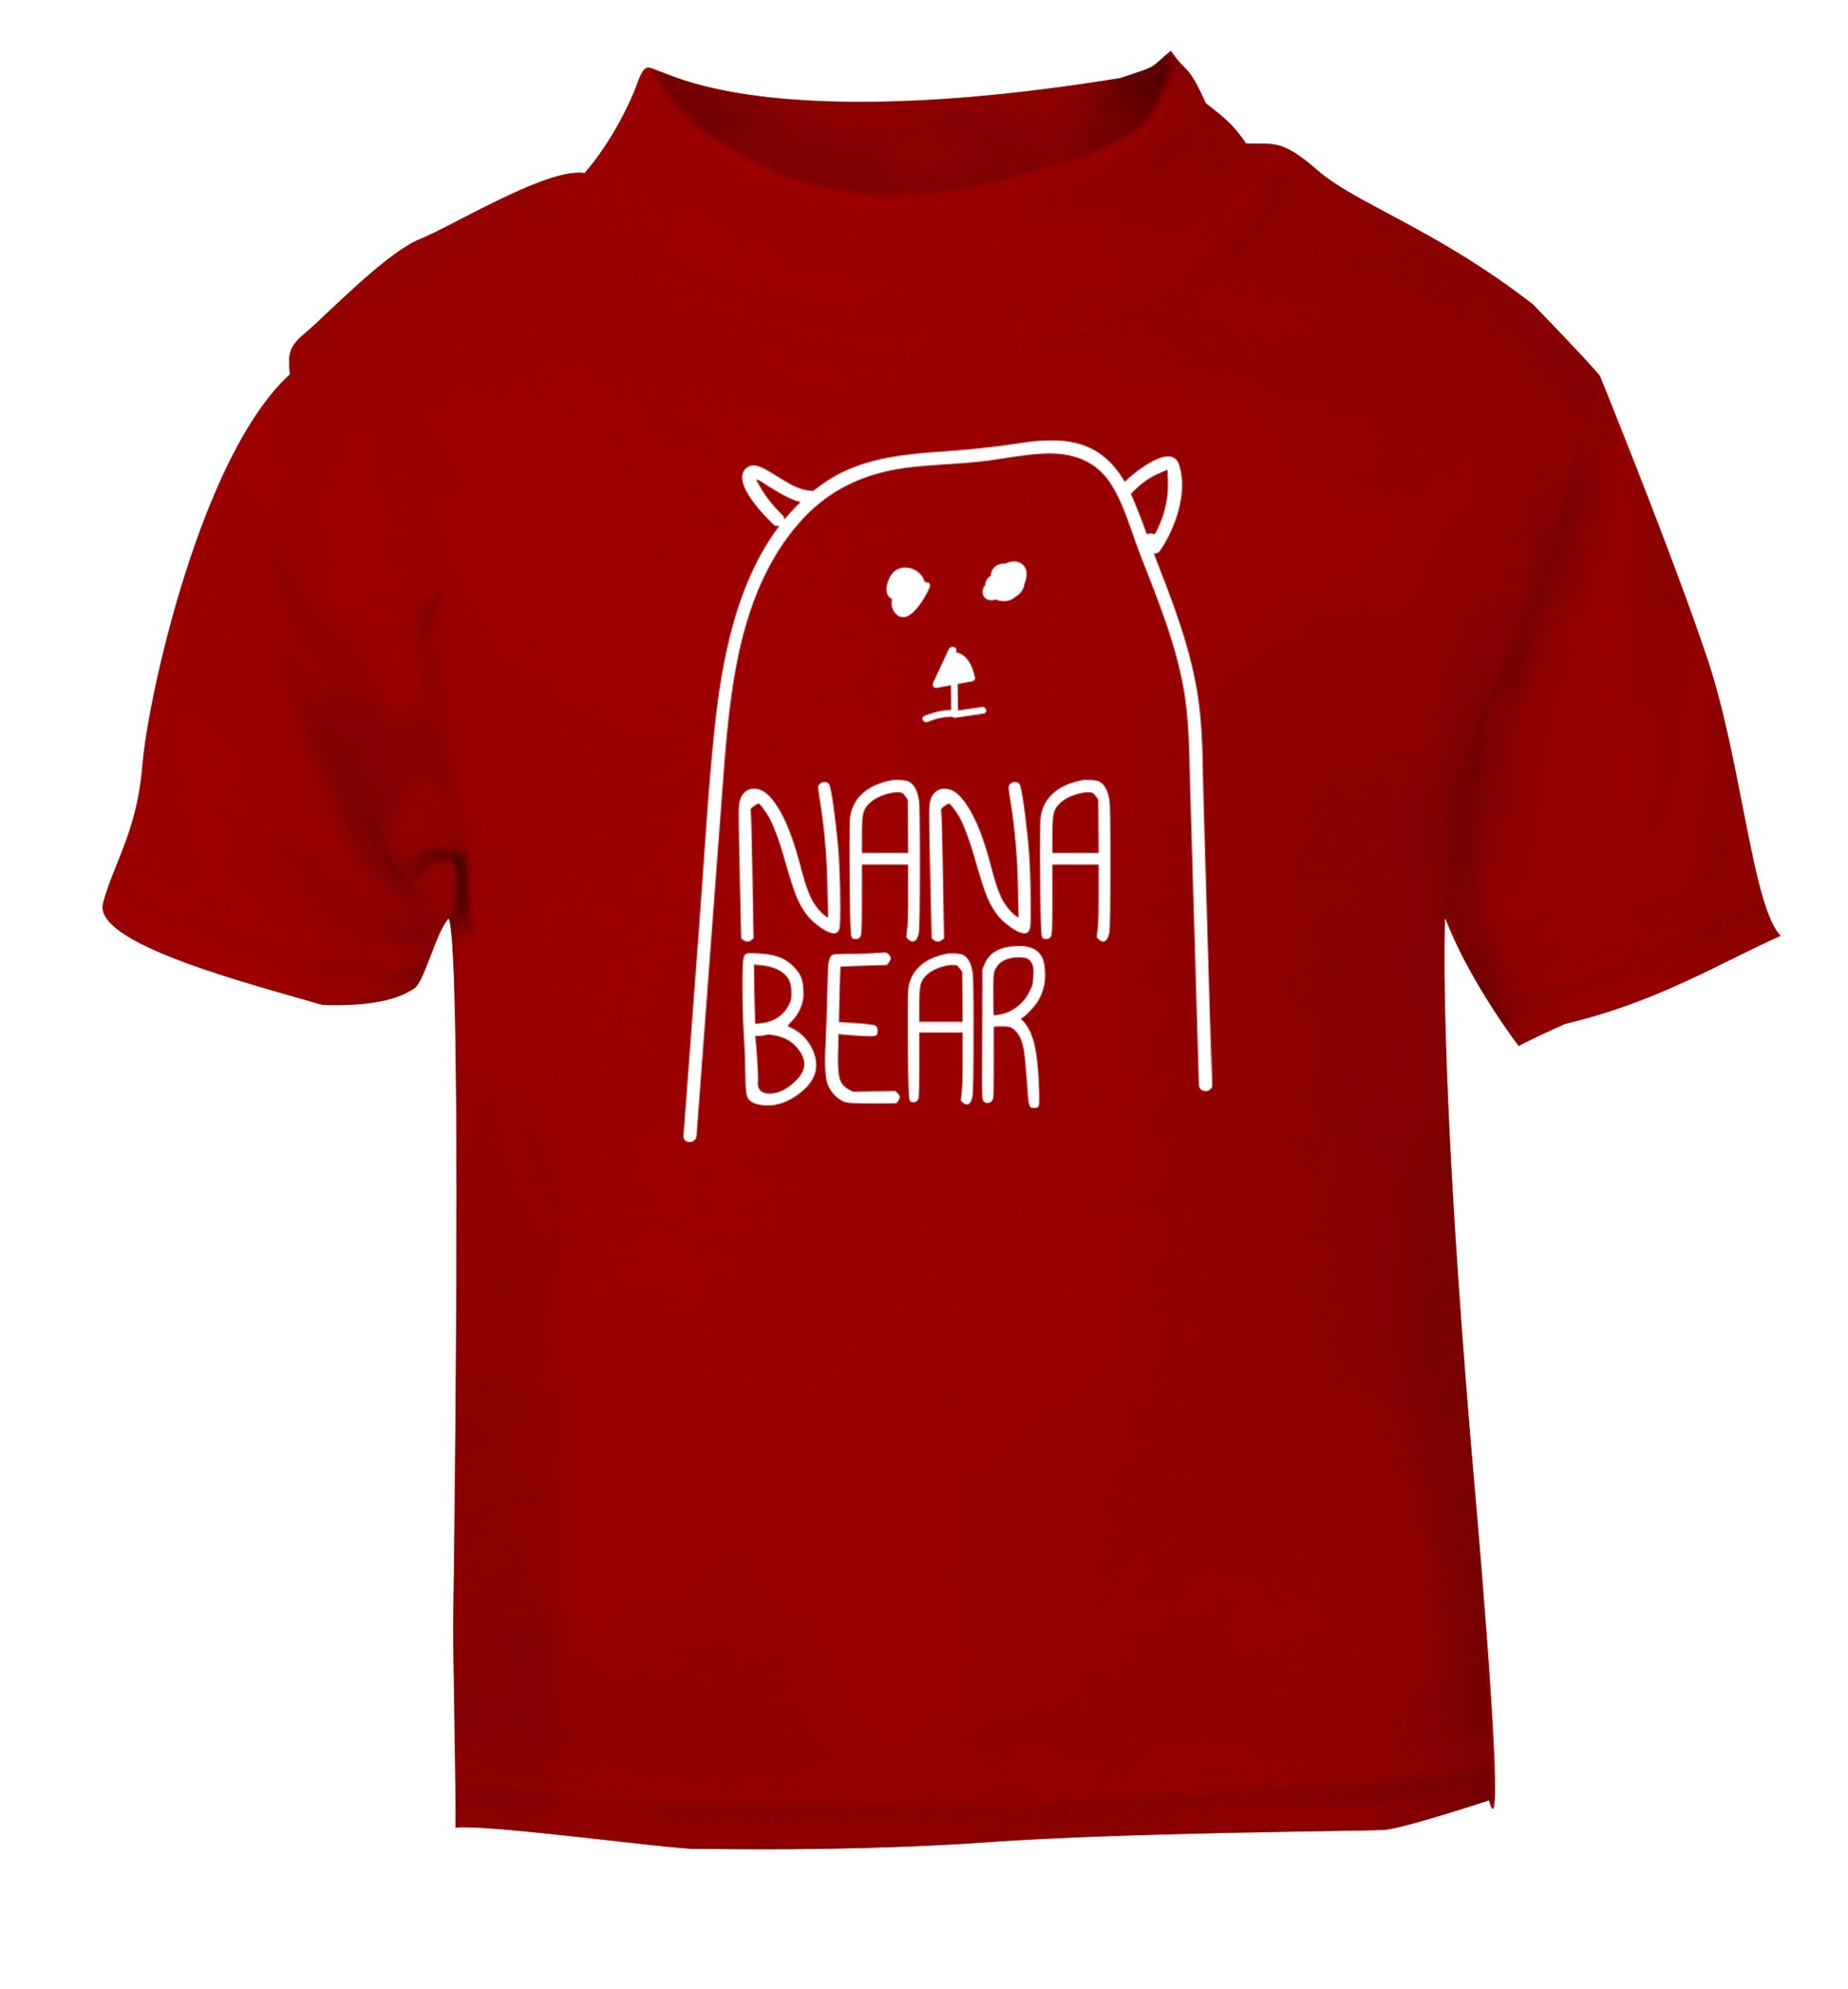 Nana bear red Baby Toddler Tshirt 2 Years